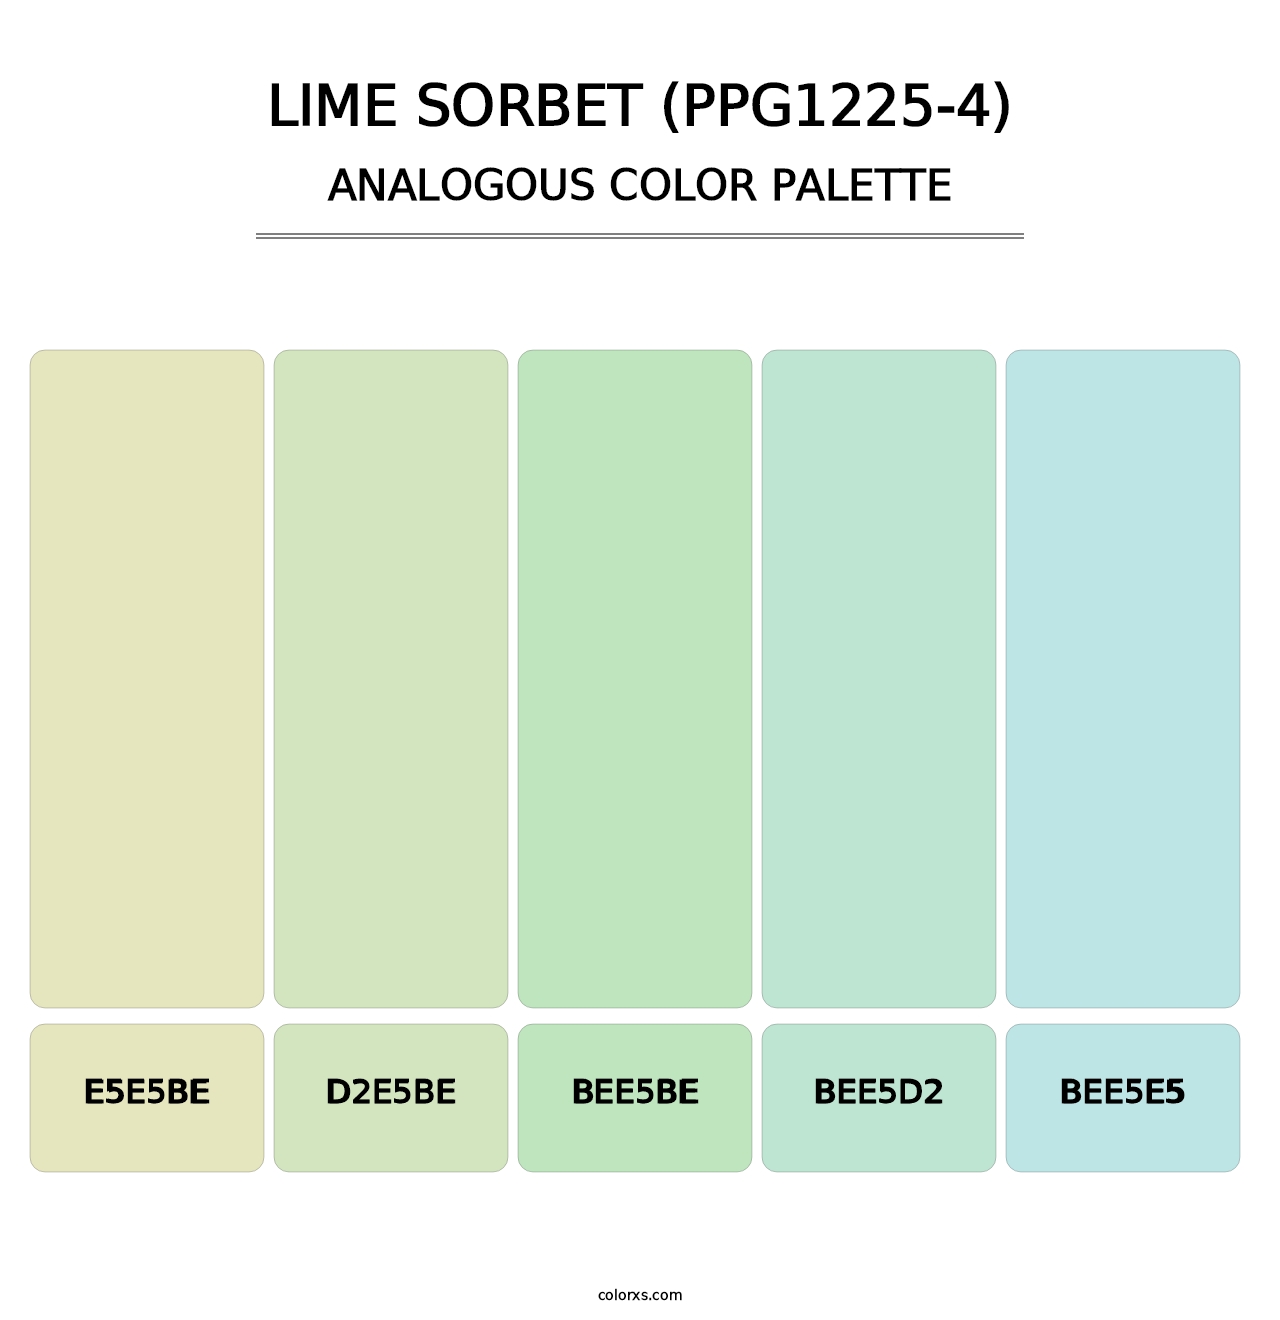 Lime Sorbet (PPG1225-4) - Analogous Color Palette